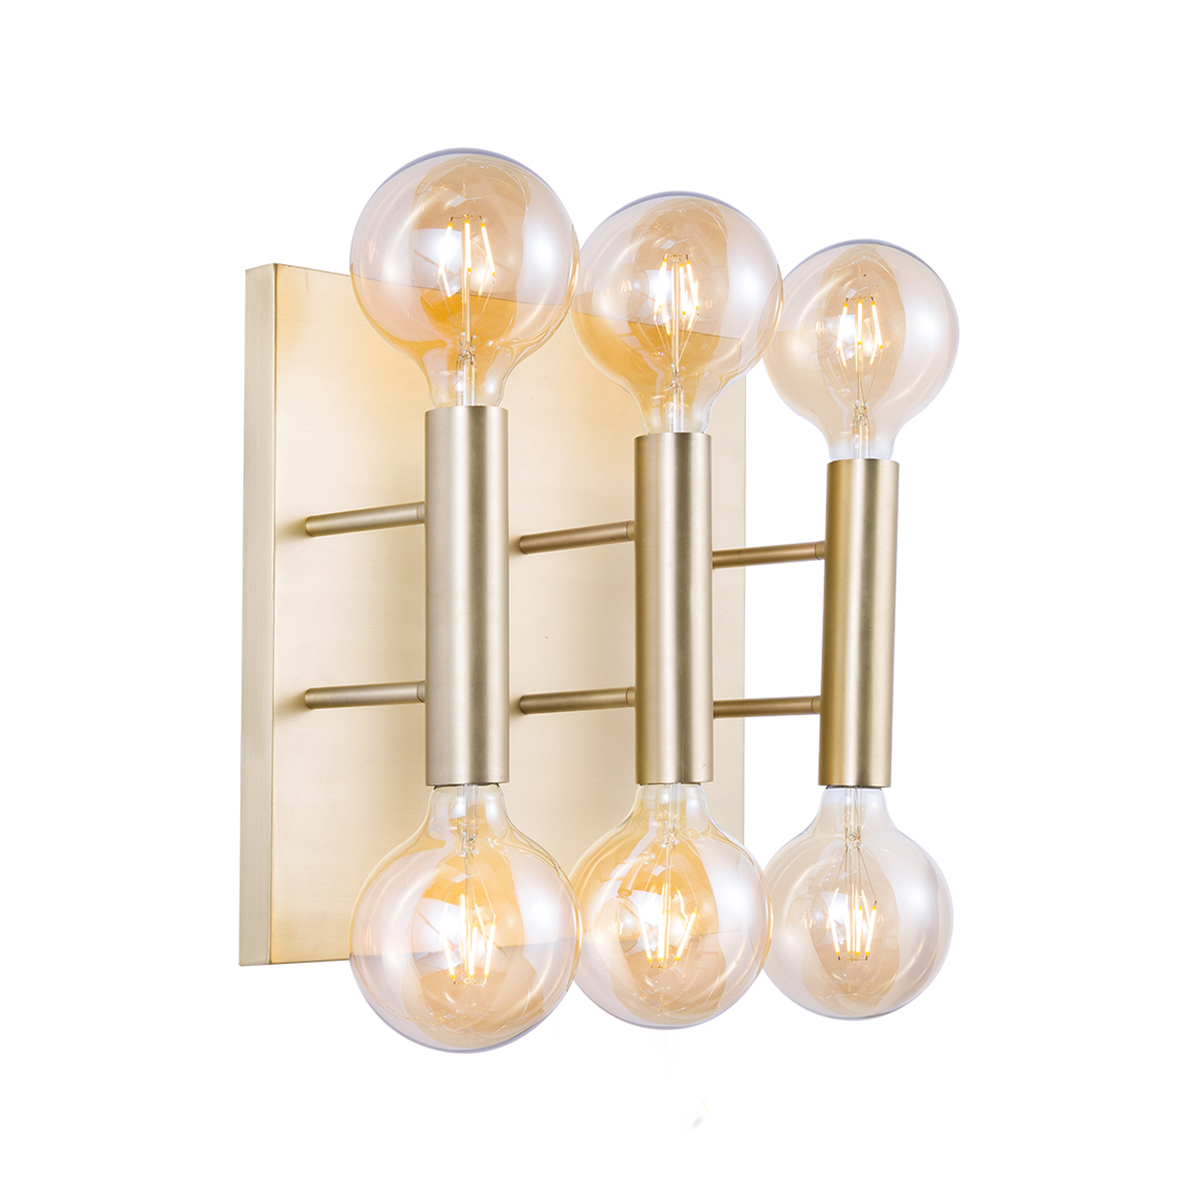 Tangla lighting - TLW5010-06BS - LED wall lamp 6 Lights - metal in brass - pillar - E27